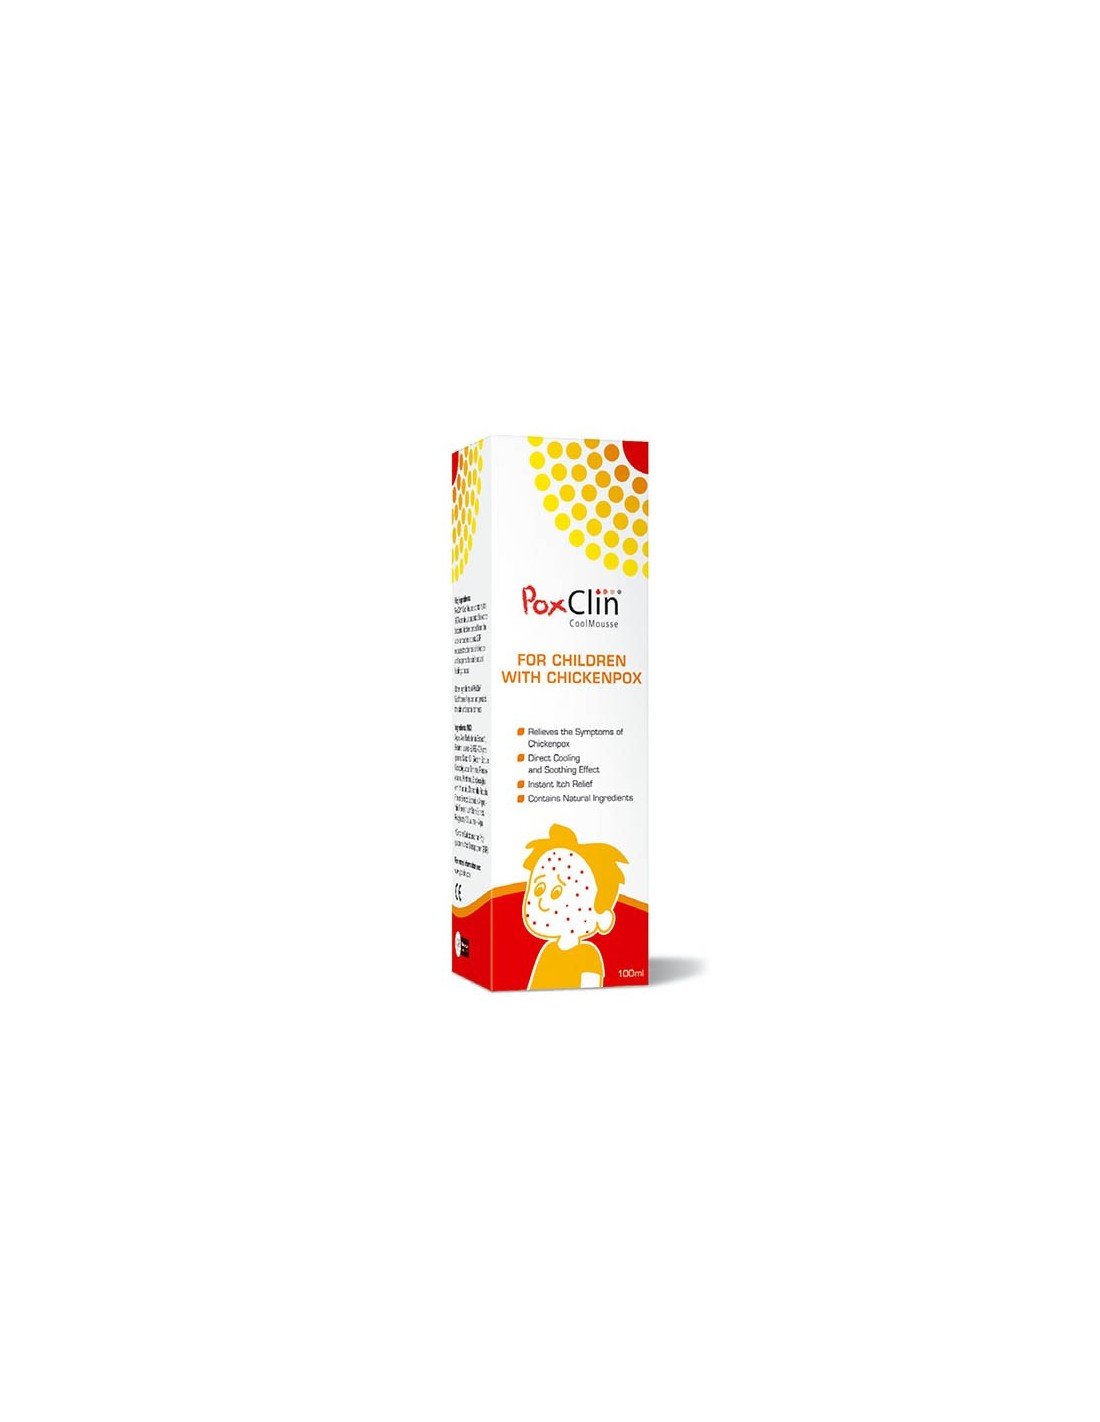 Ingrijirea pielii - Poxclin spray contra varicelei 100ml - Vitalia Pharma , nordpharm.ro